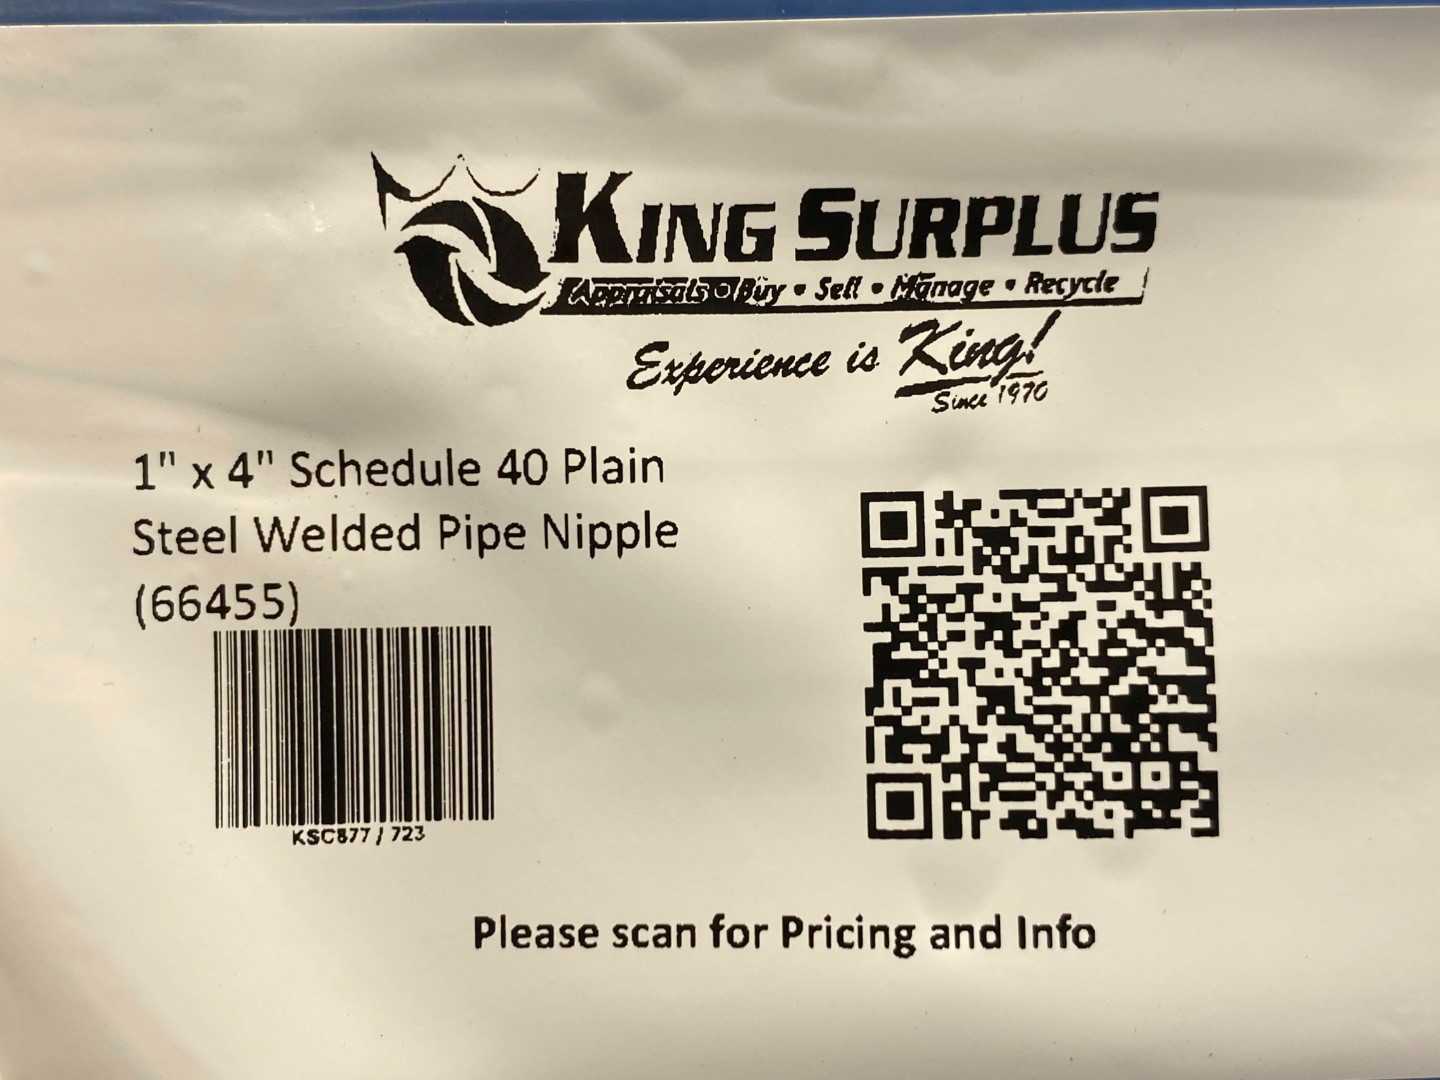 1" x 4" Schedule 40 Plain Steel Welded Pipe Nipple (66455)